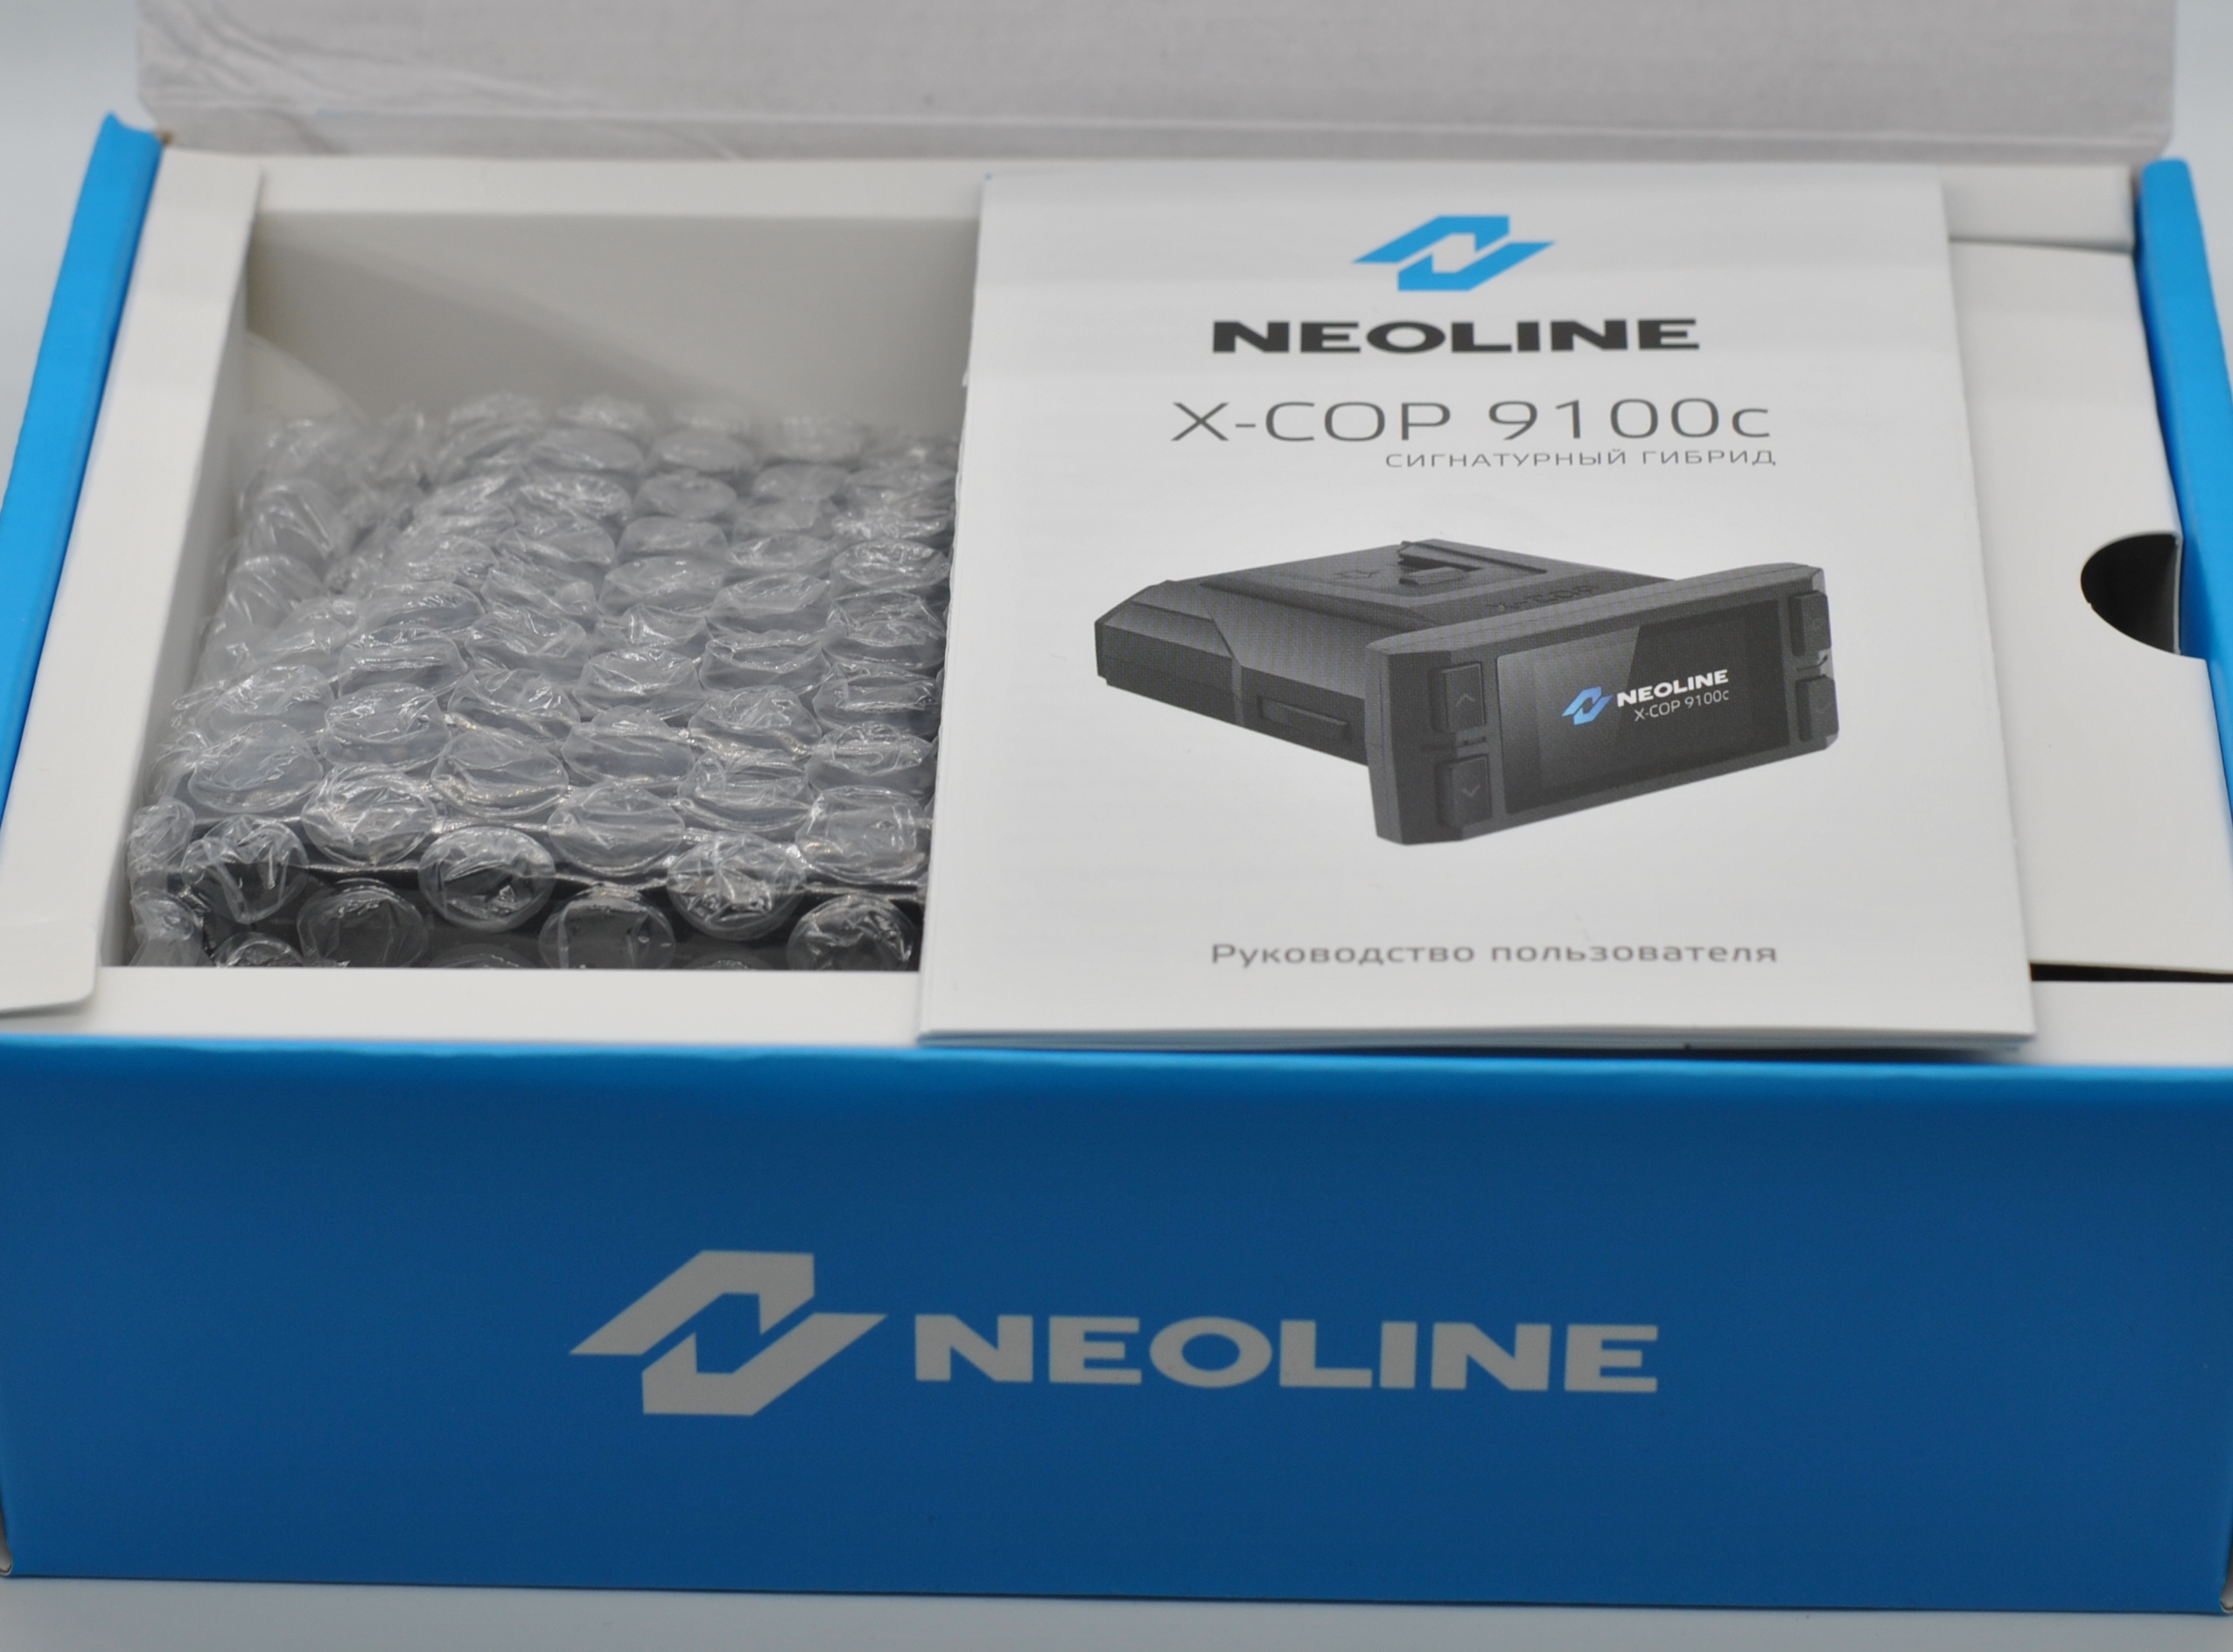 Neoline x cop гибрид. Неолайн 9100. Neoline x-cop 9100s. Neoline x-cop 9100d обзор.